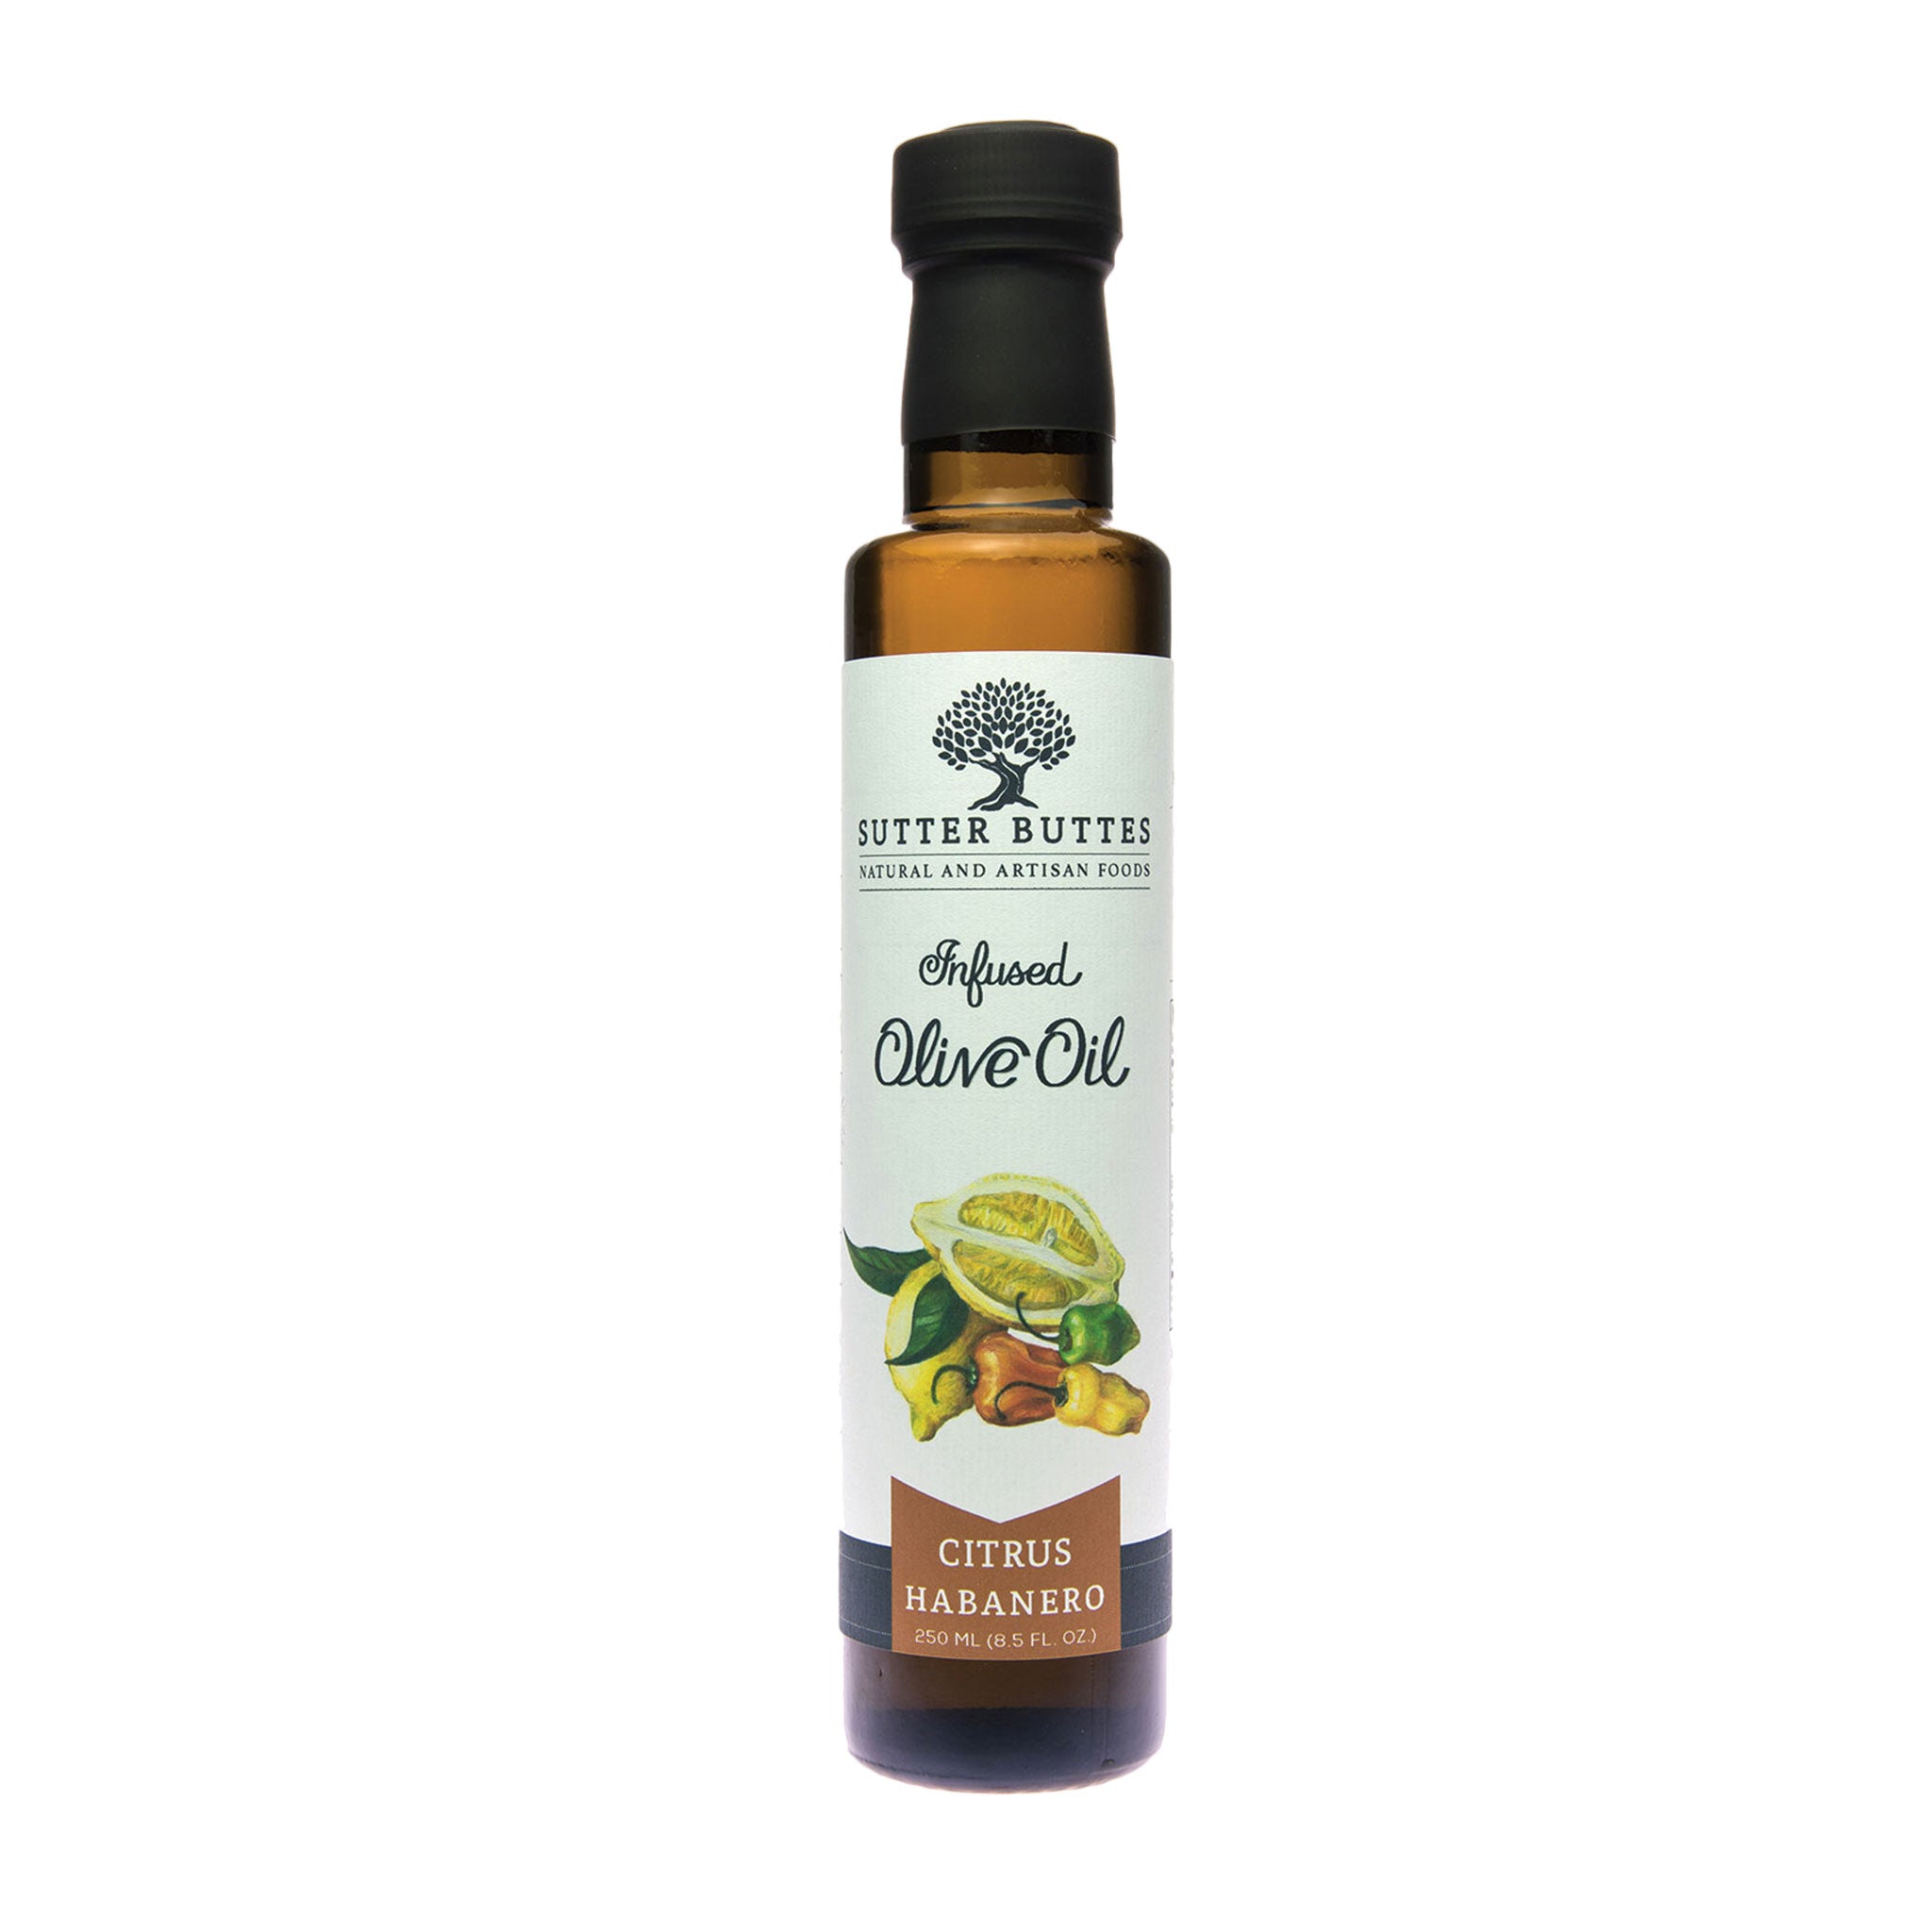 Citrus Habanero Olive Oil, 250 ml